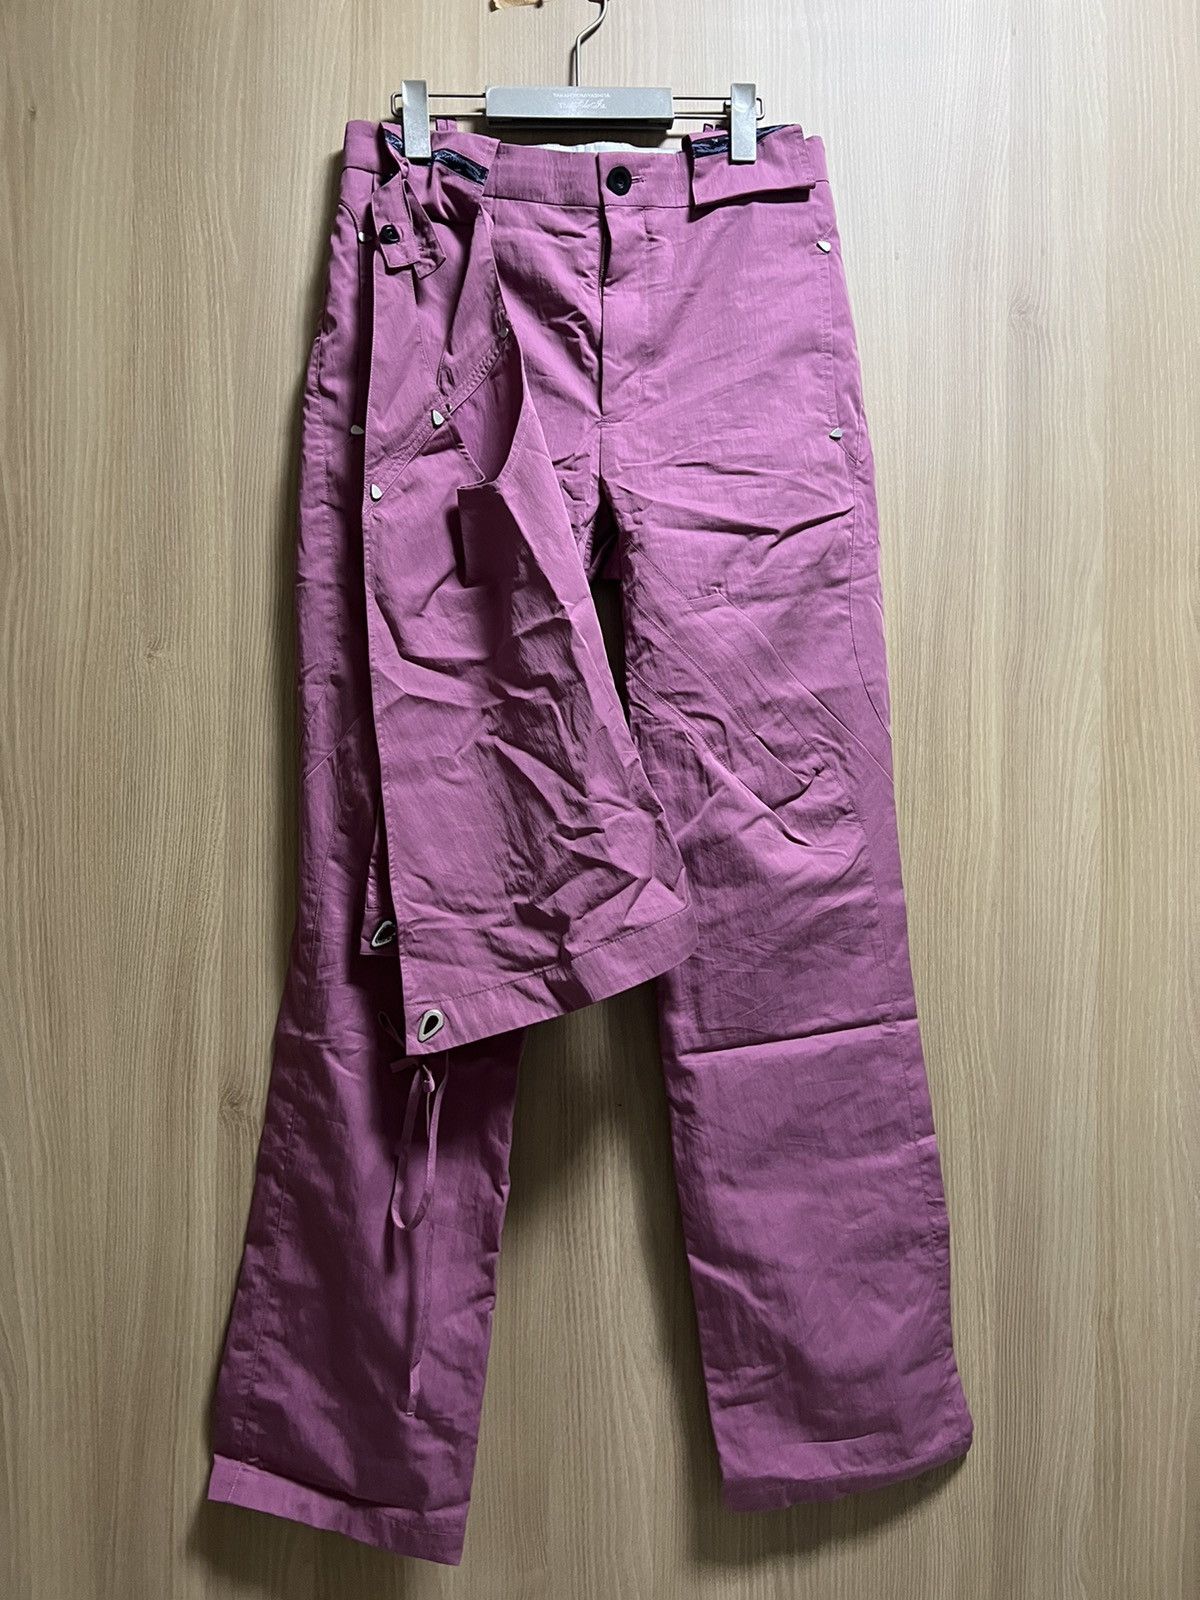 kiko kostadinov dorset apron trousers 48 www.sudouestprimeurs.fr